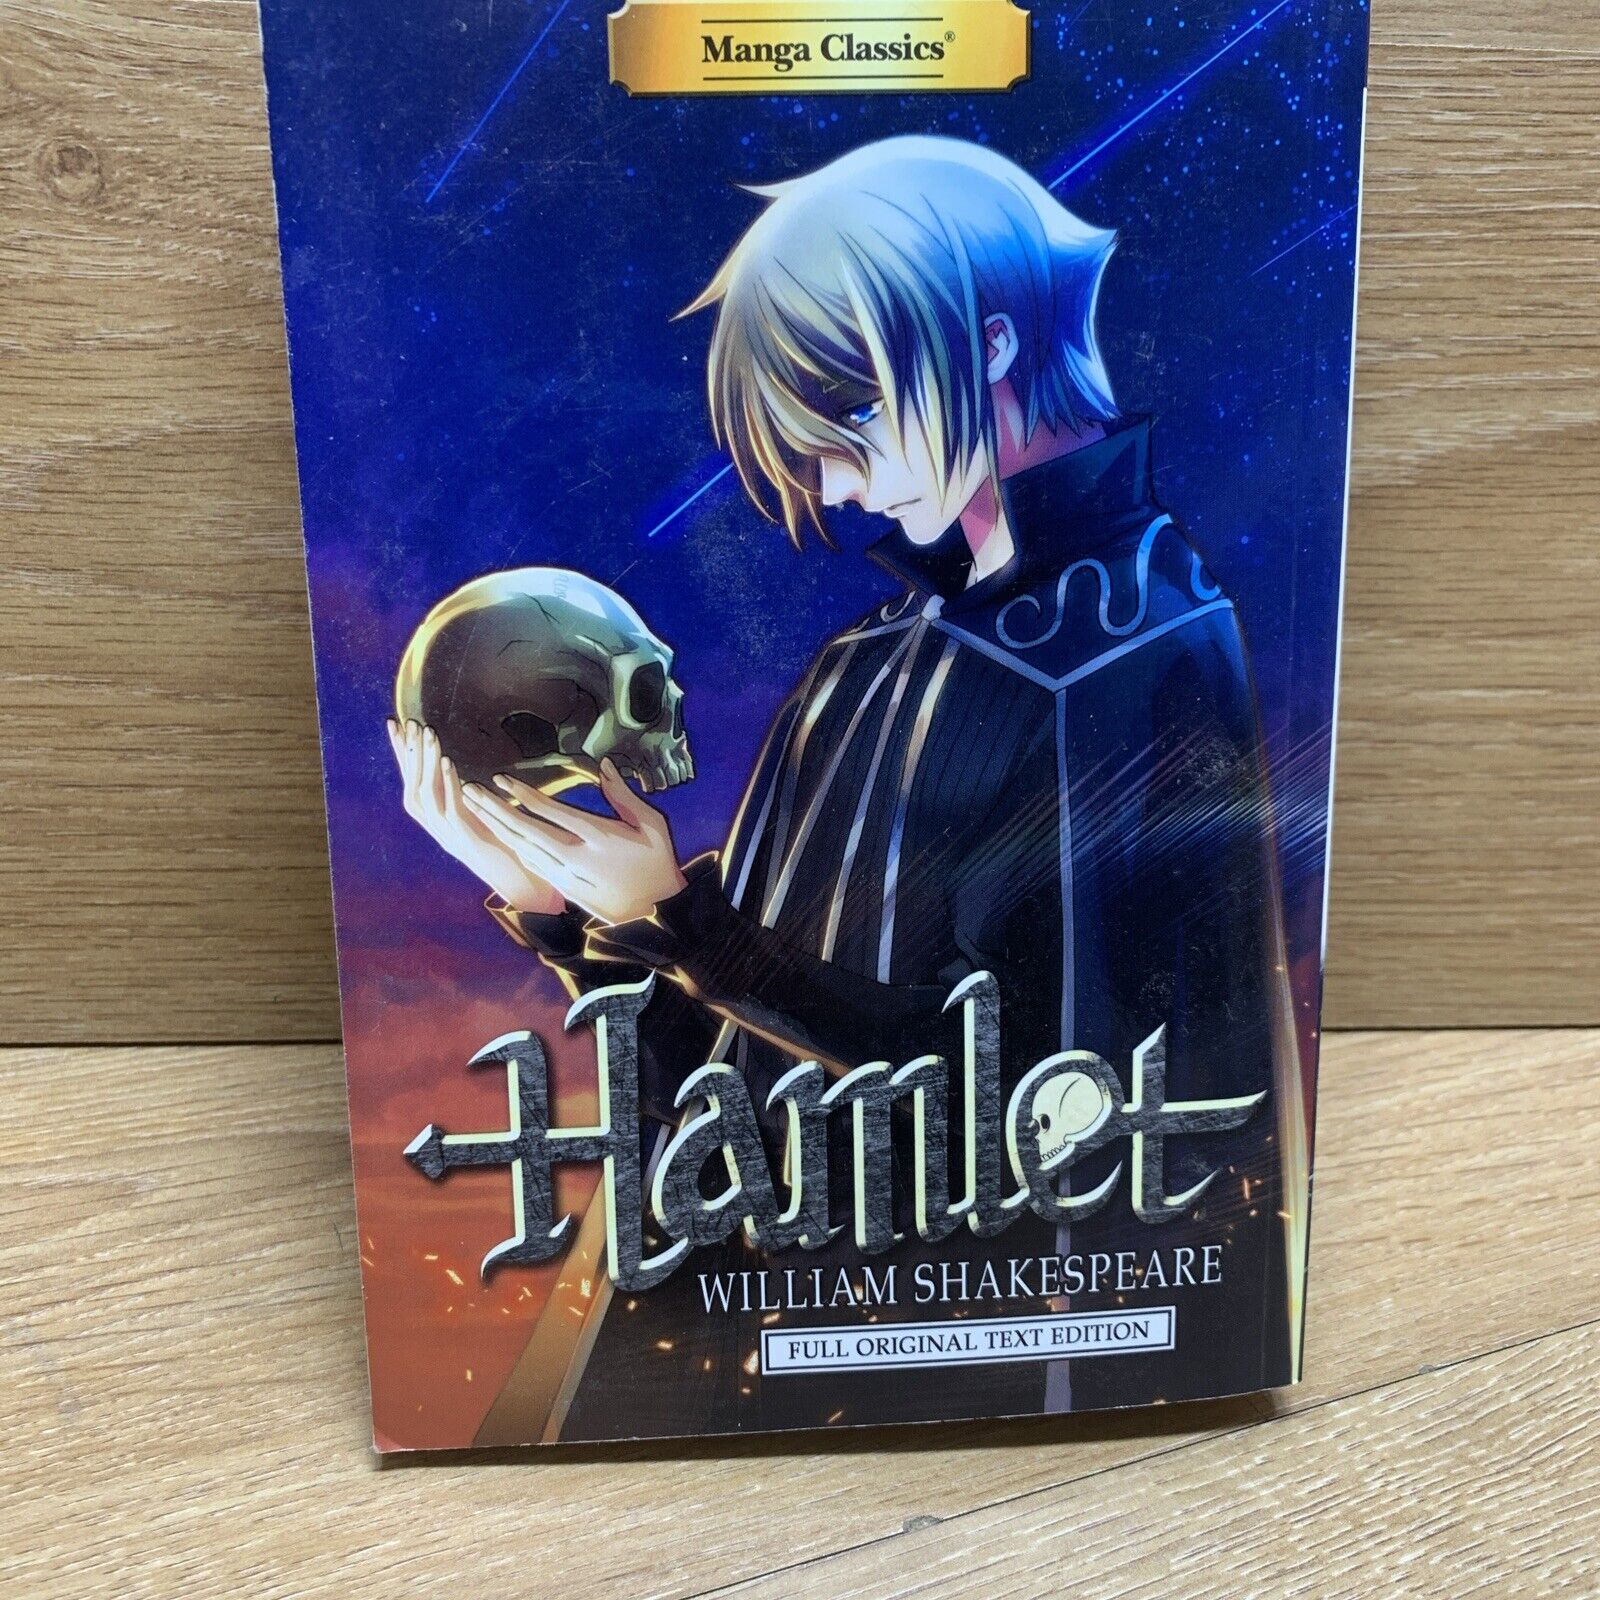 Manga Classics: Hamlet by William Shakespeare Full original Text Edition